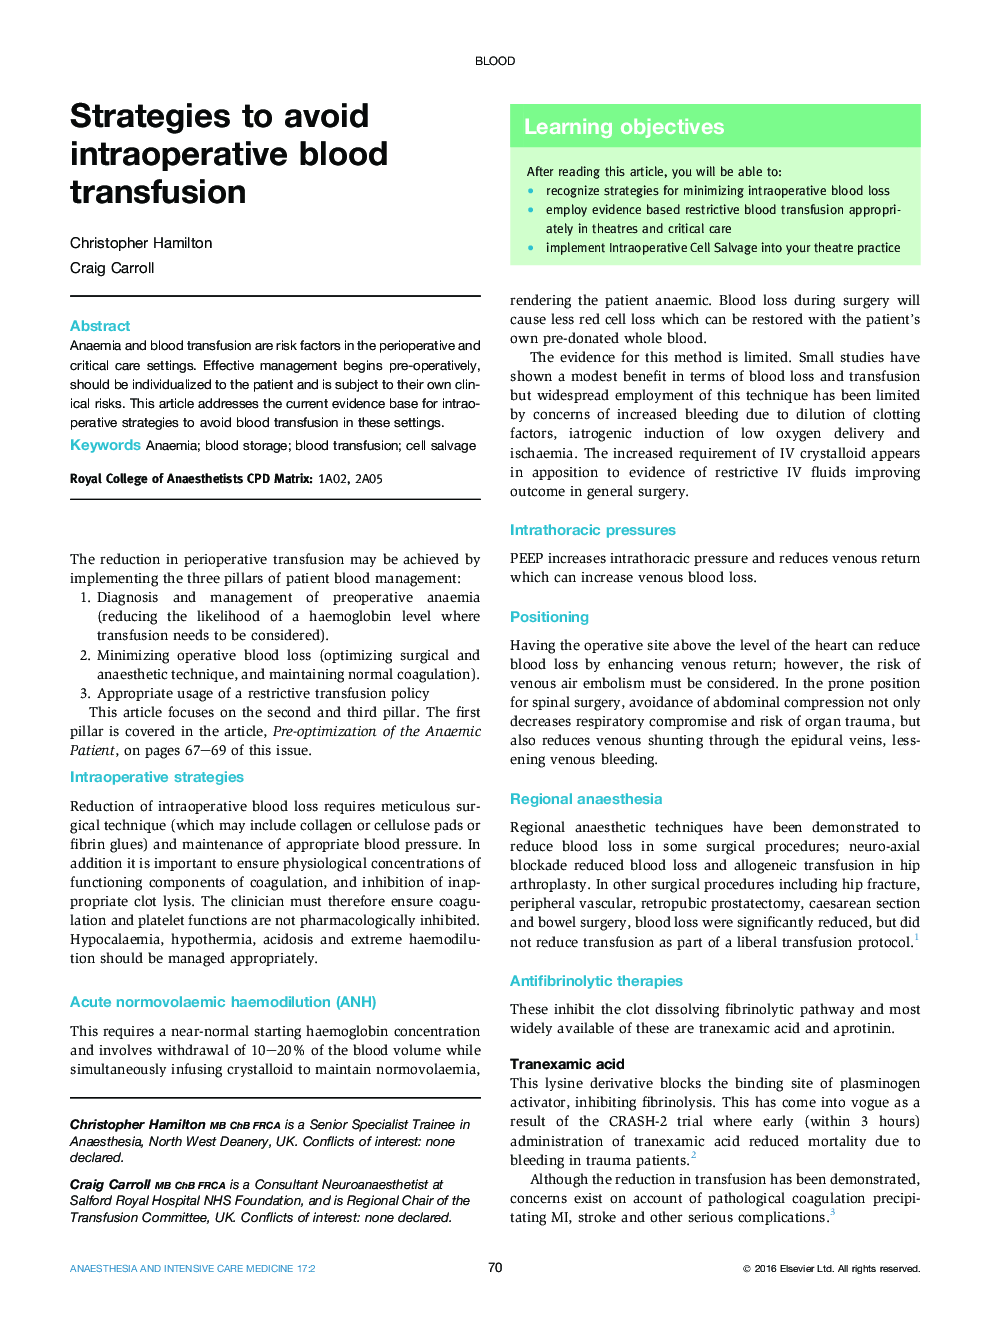 Strategies to avoid intraoperative blood transfusion